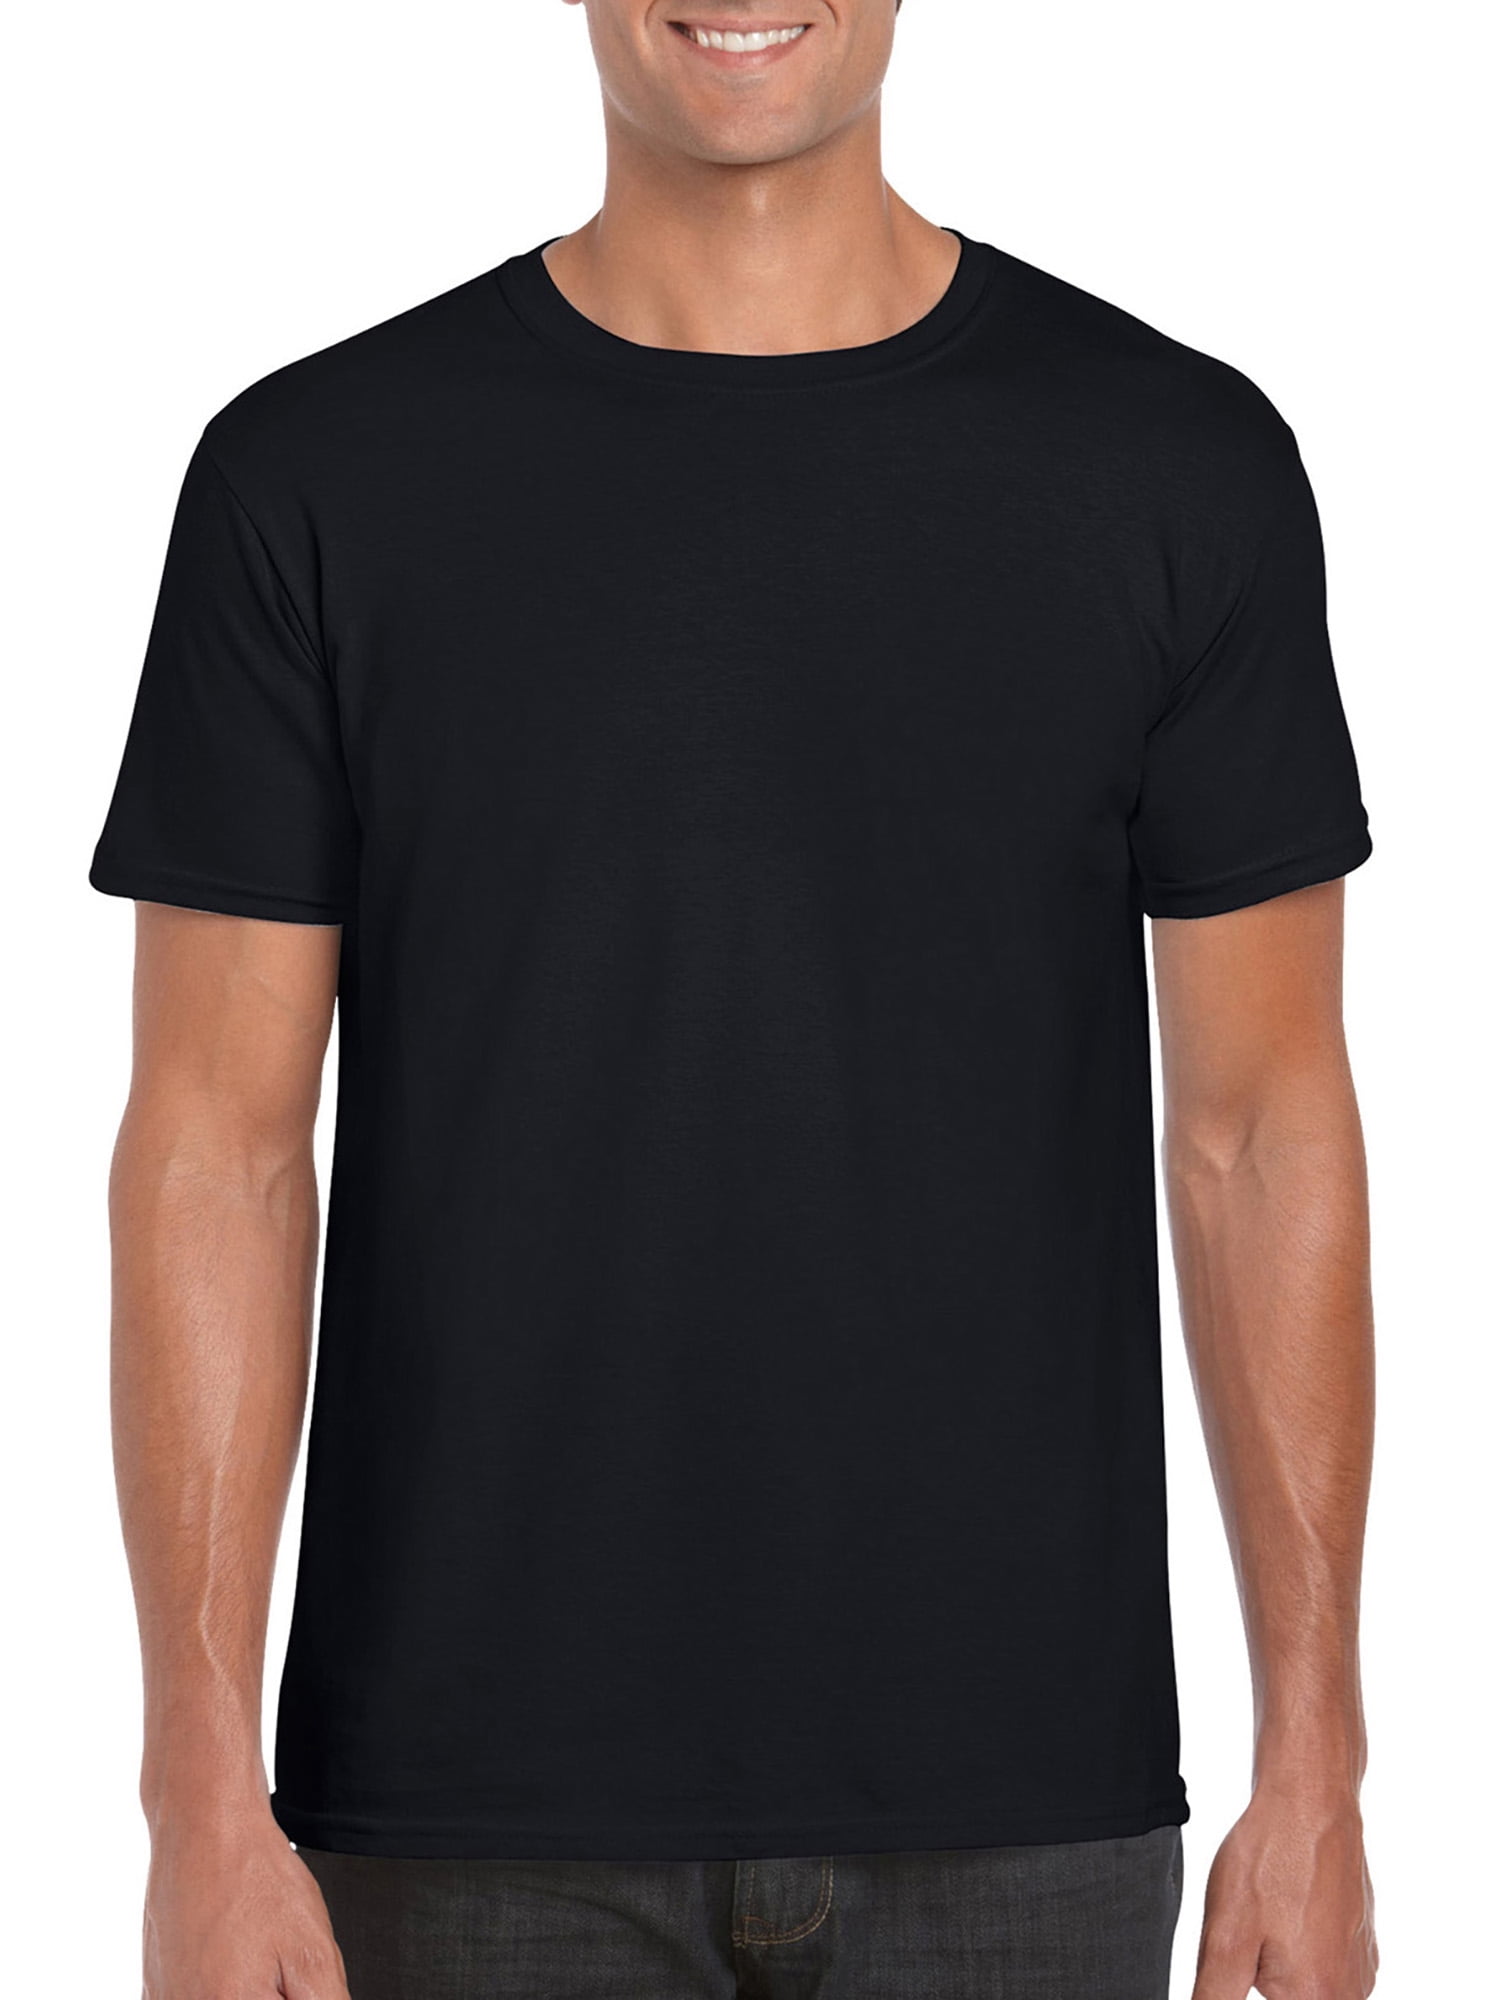 Gildan Mens Plain Ultra Cotton T-Shirts Short Sleeve Blank Crewneck Tee Top G200 